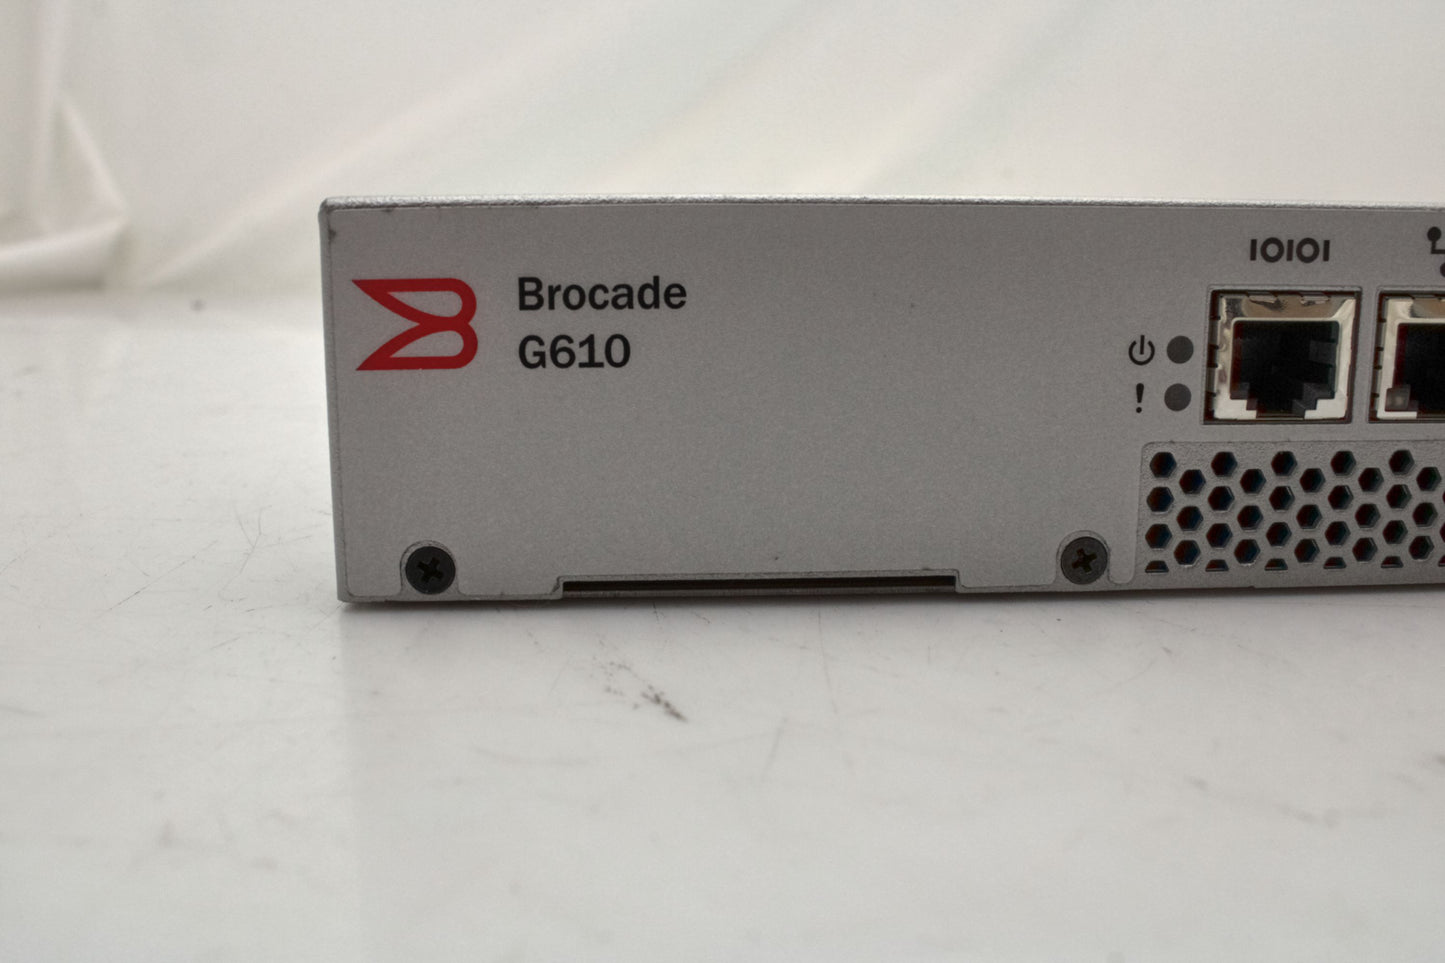 Brocade BR-G610 32GB FC SAN Switch 8-24 port, Used